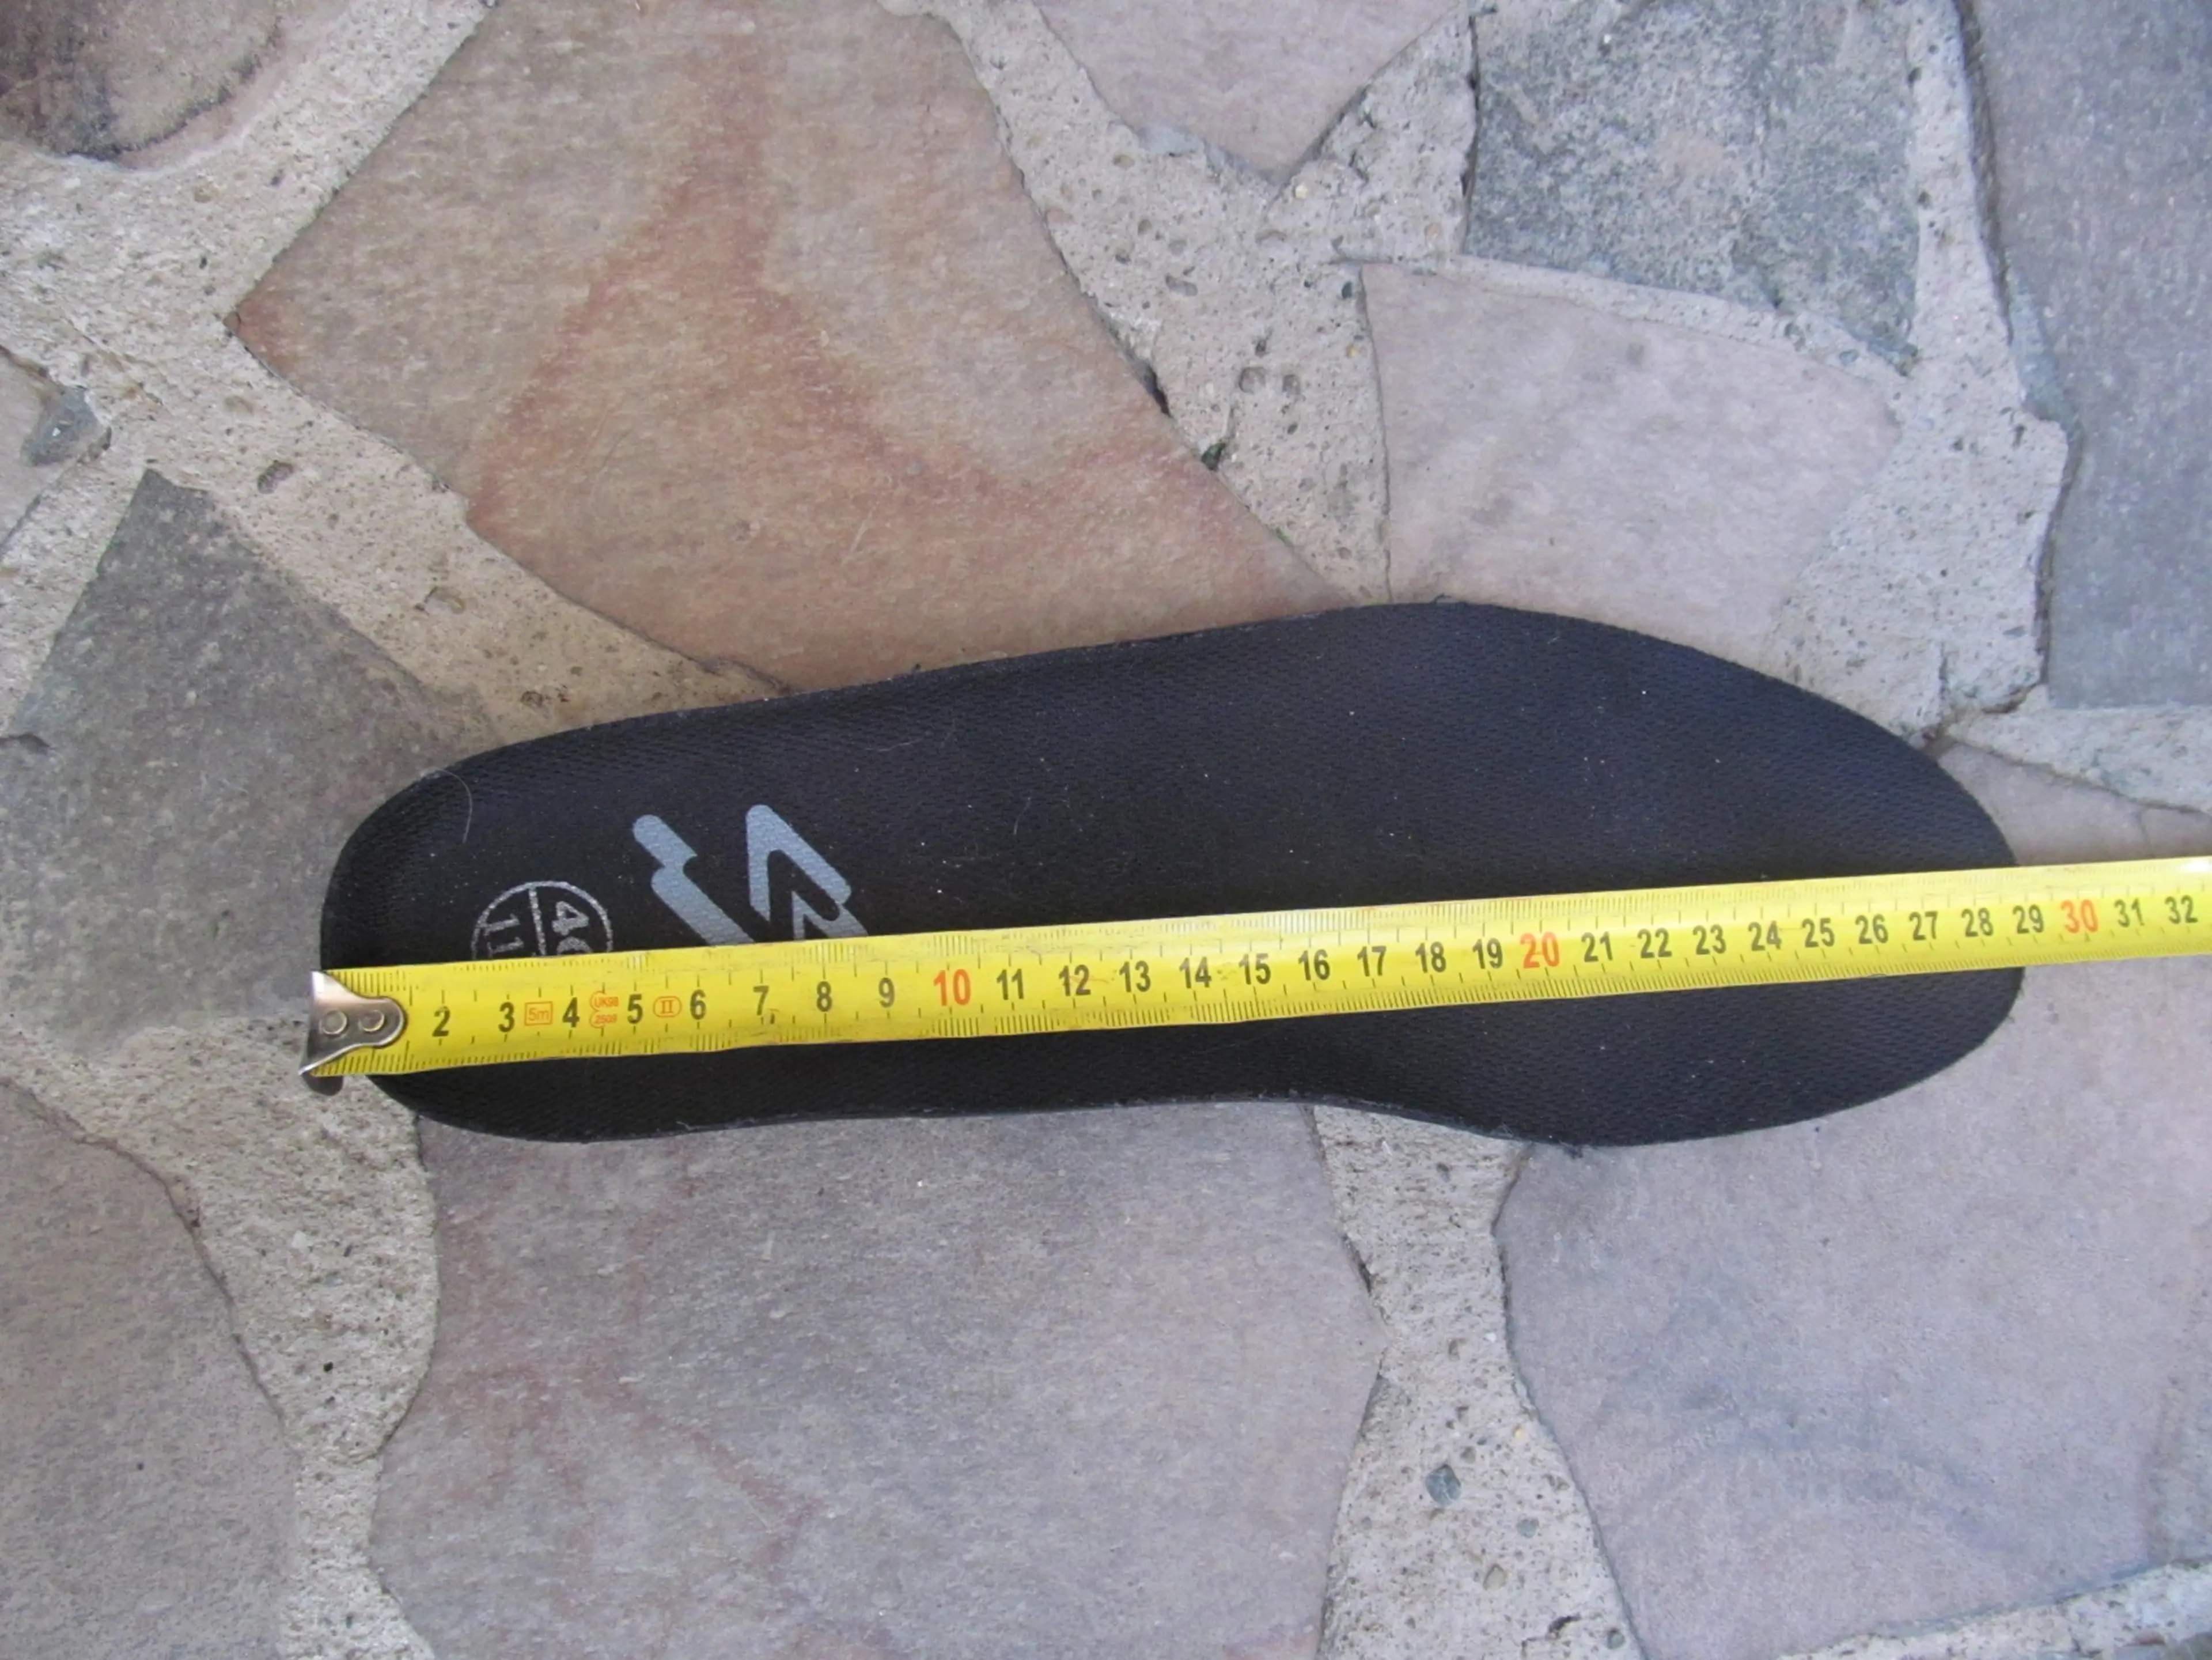 1. Pantofi Spiuk nr 46, 29 cm